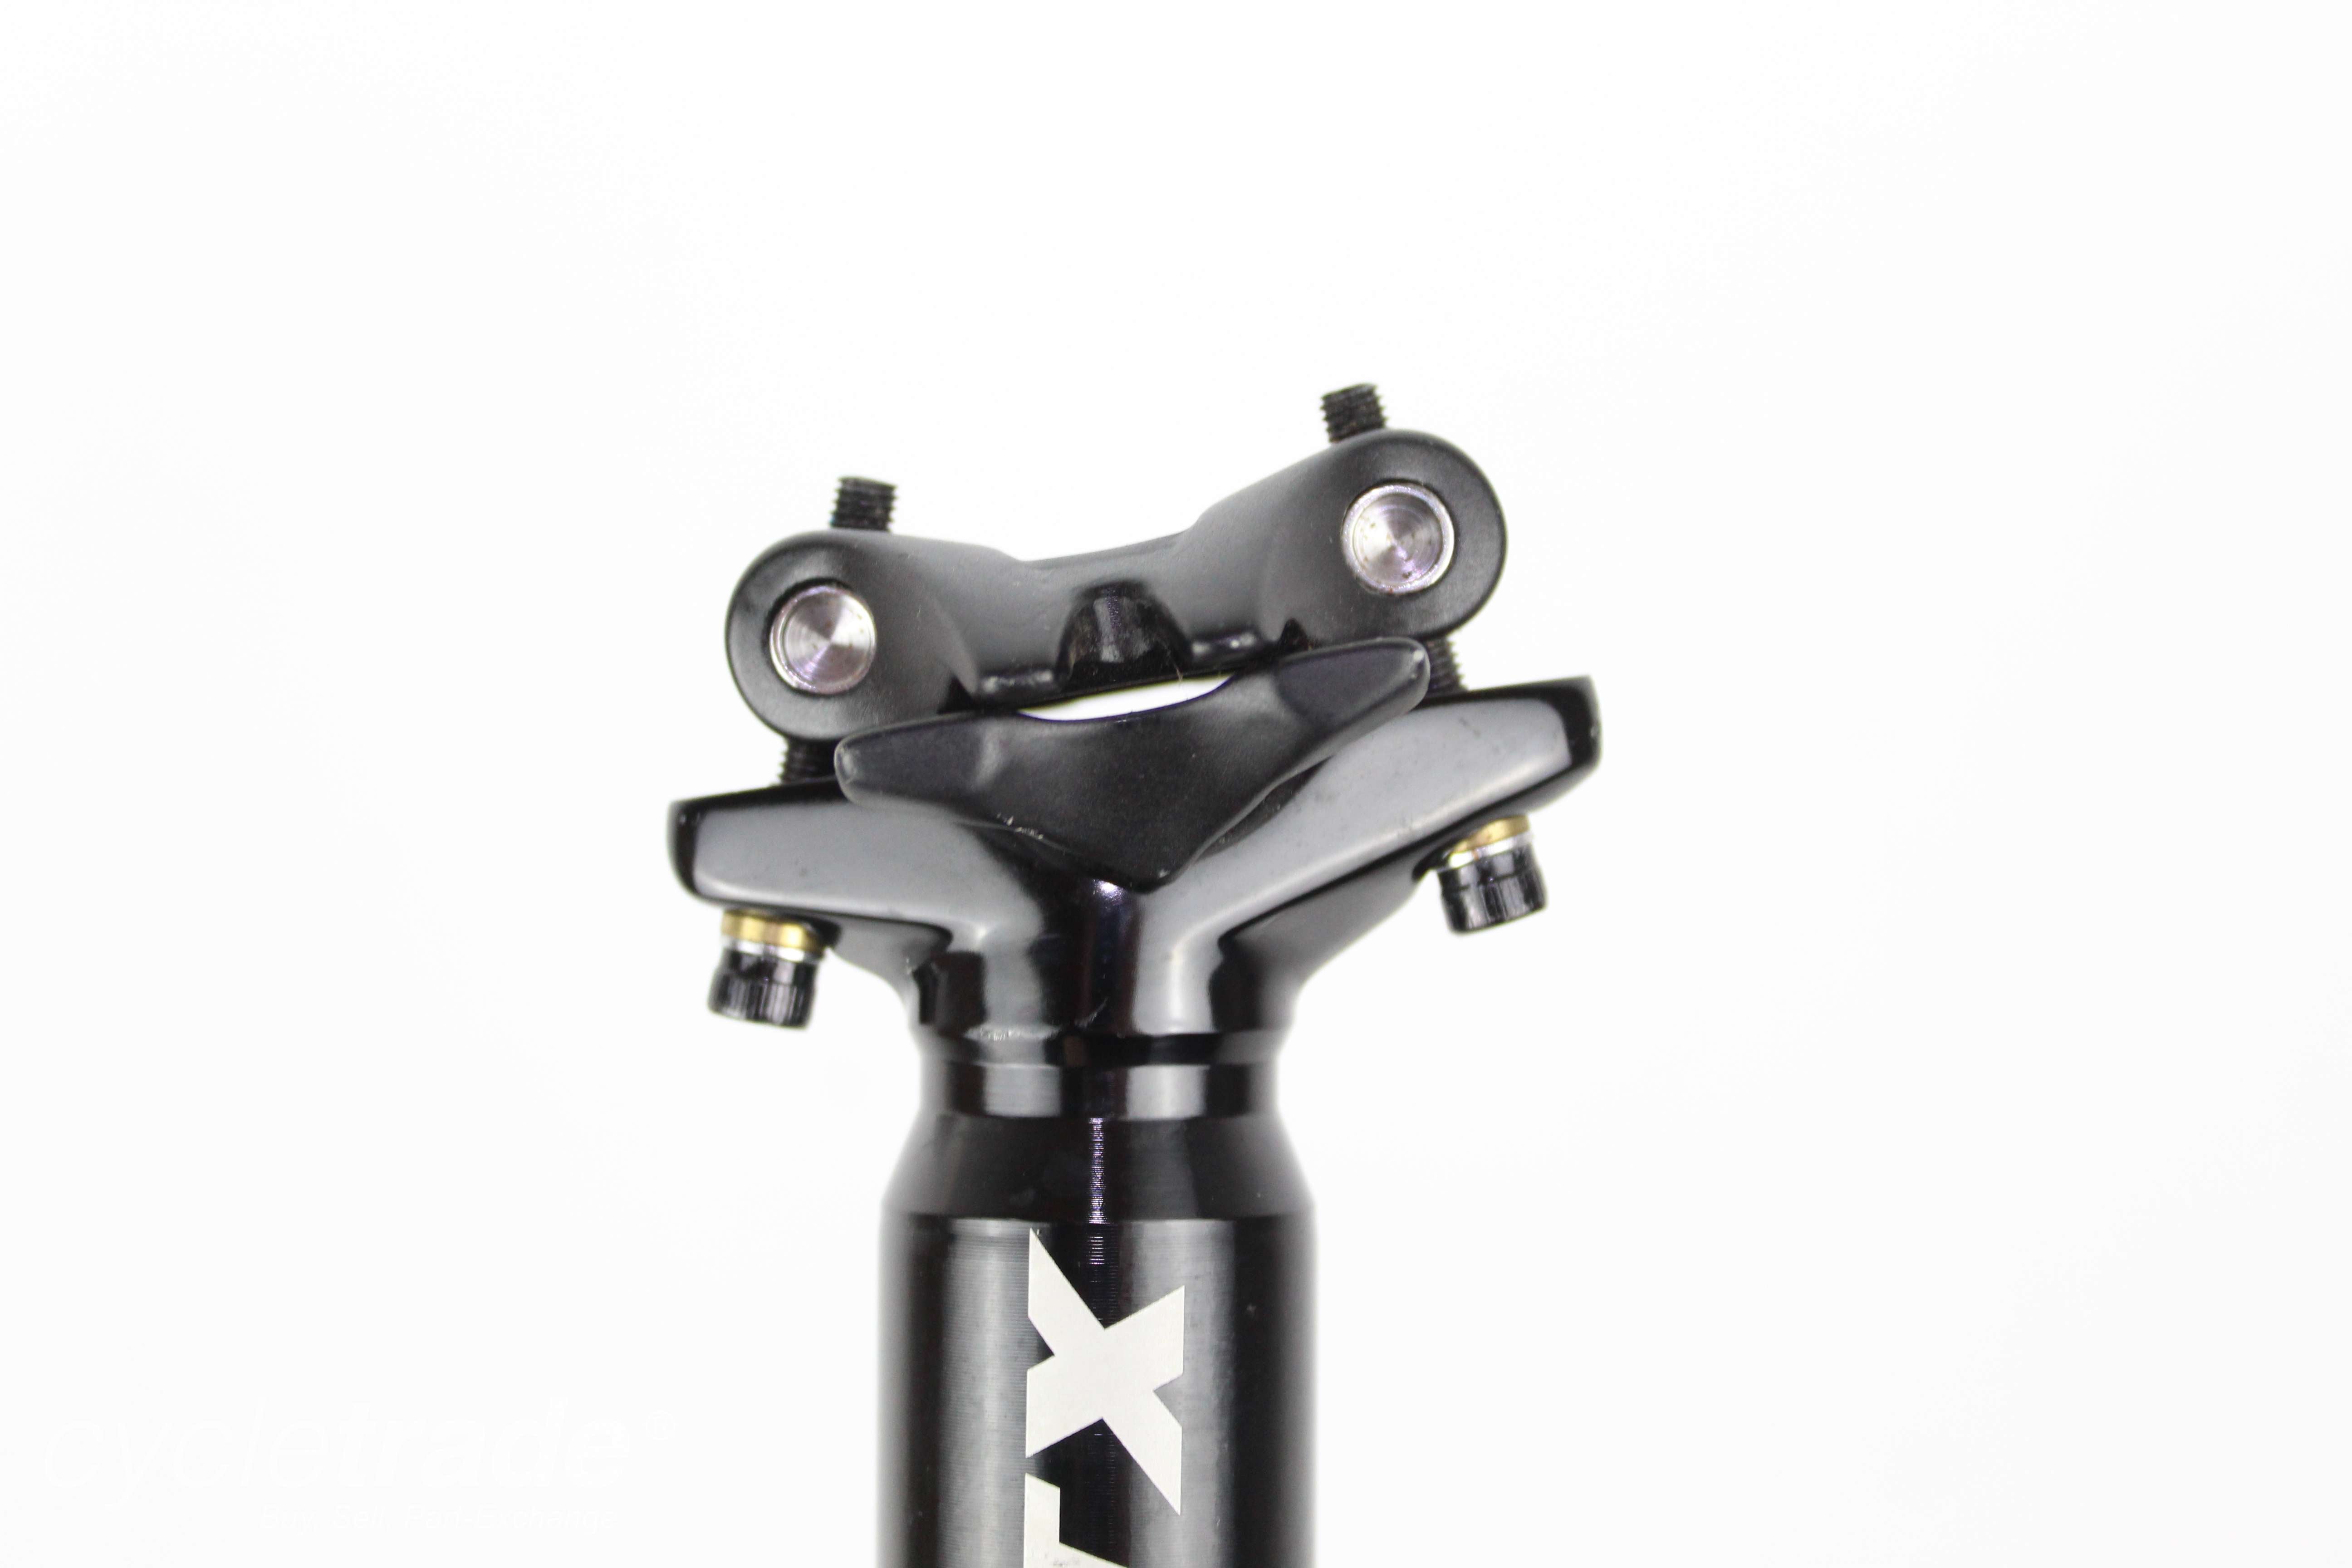 Seatpost- Planet X Twelfty Light Alloy 31.6mm 600mm- Grade B+